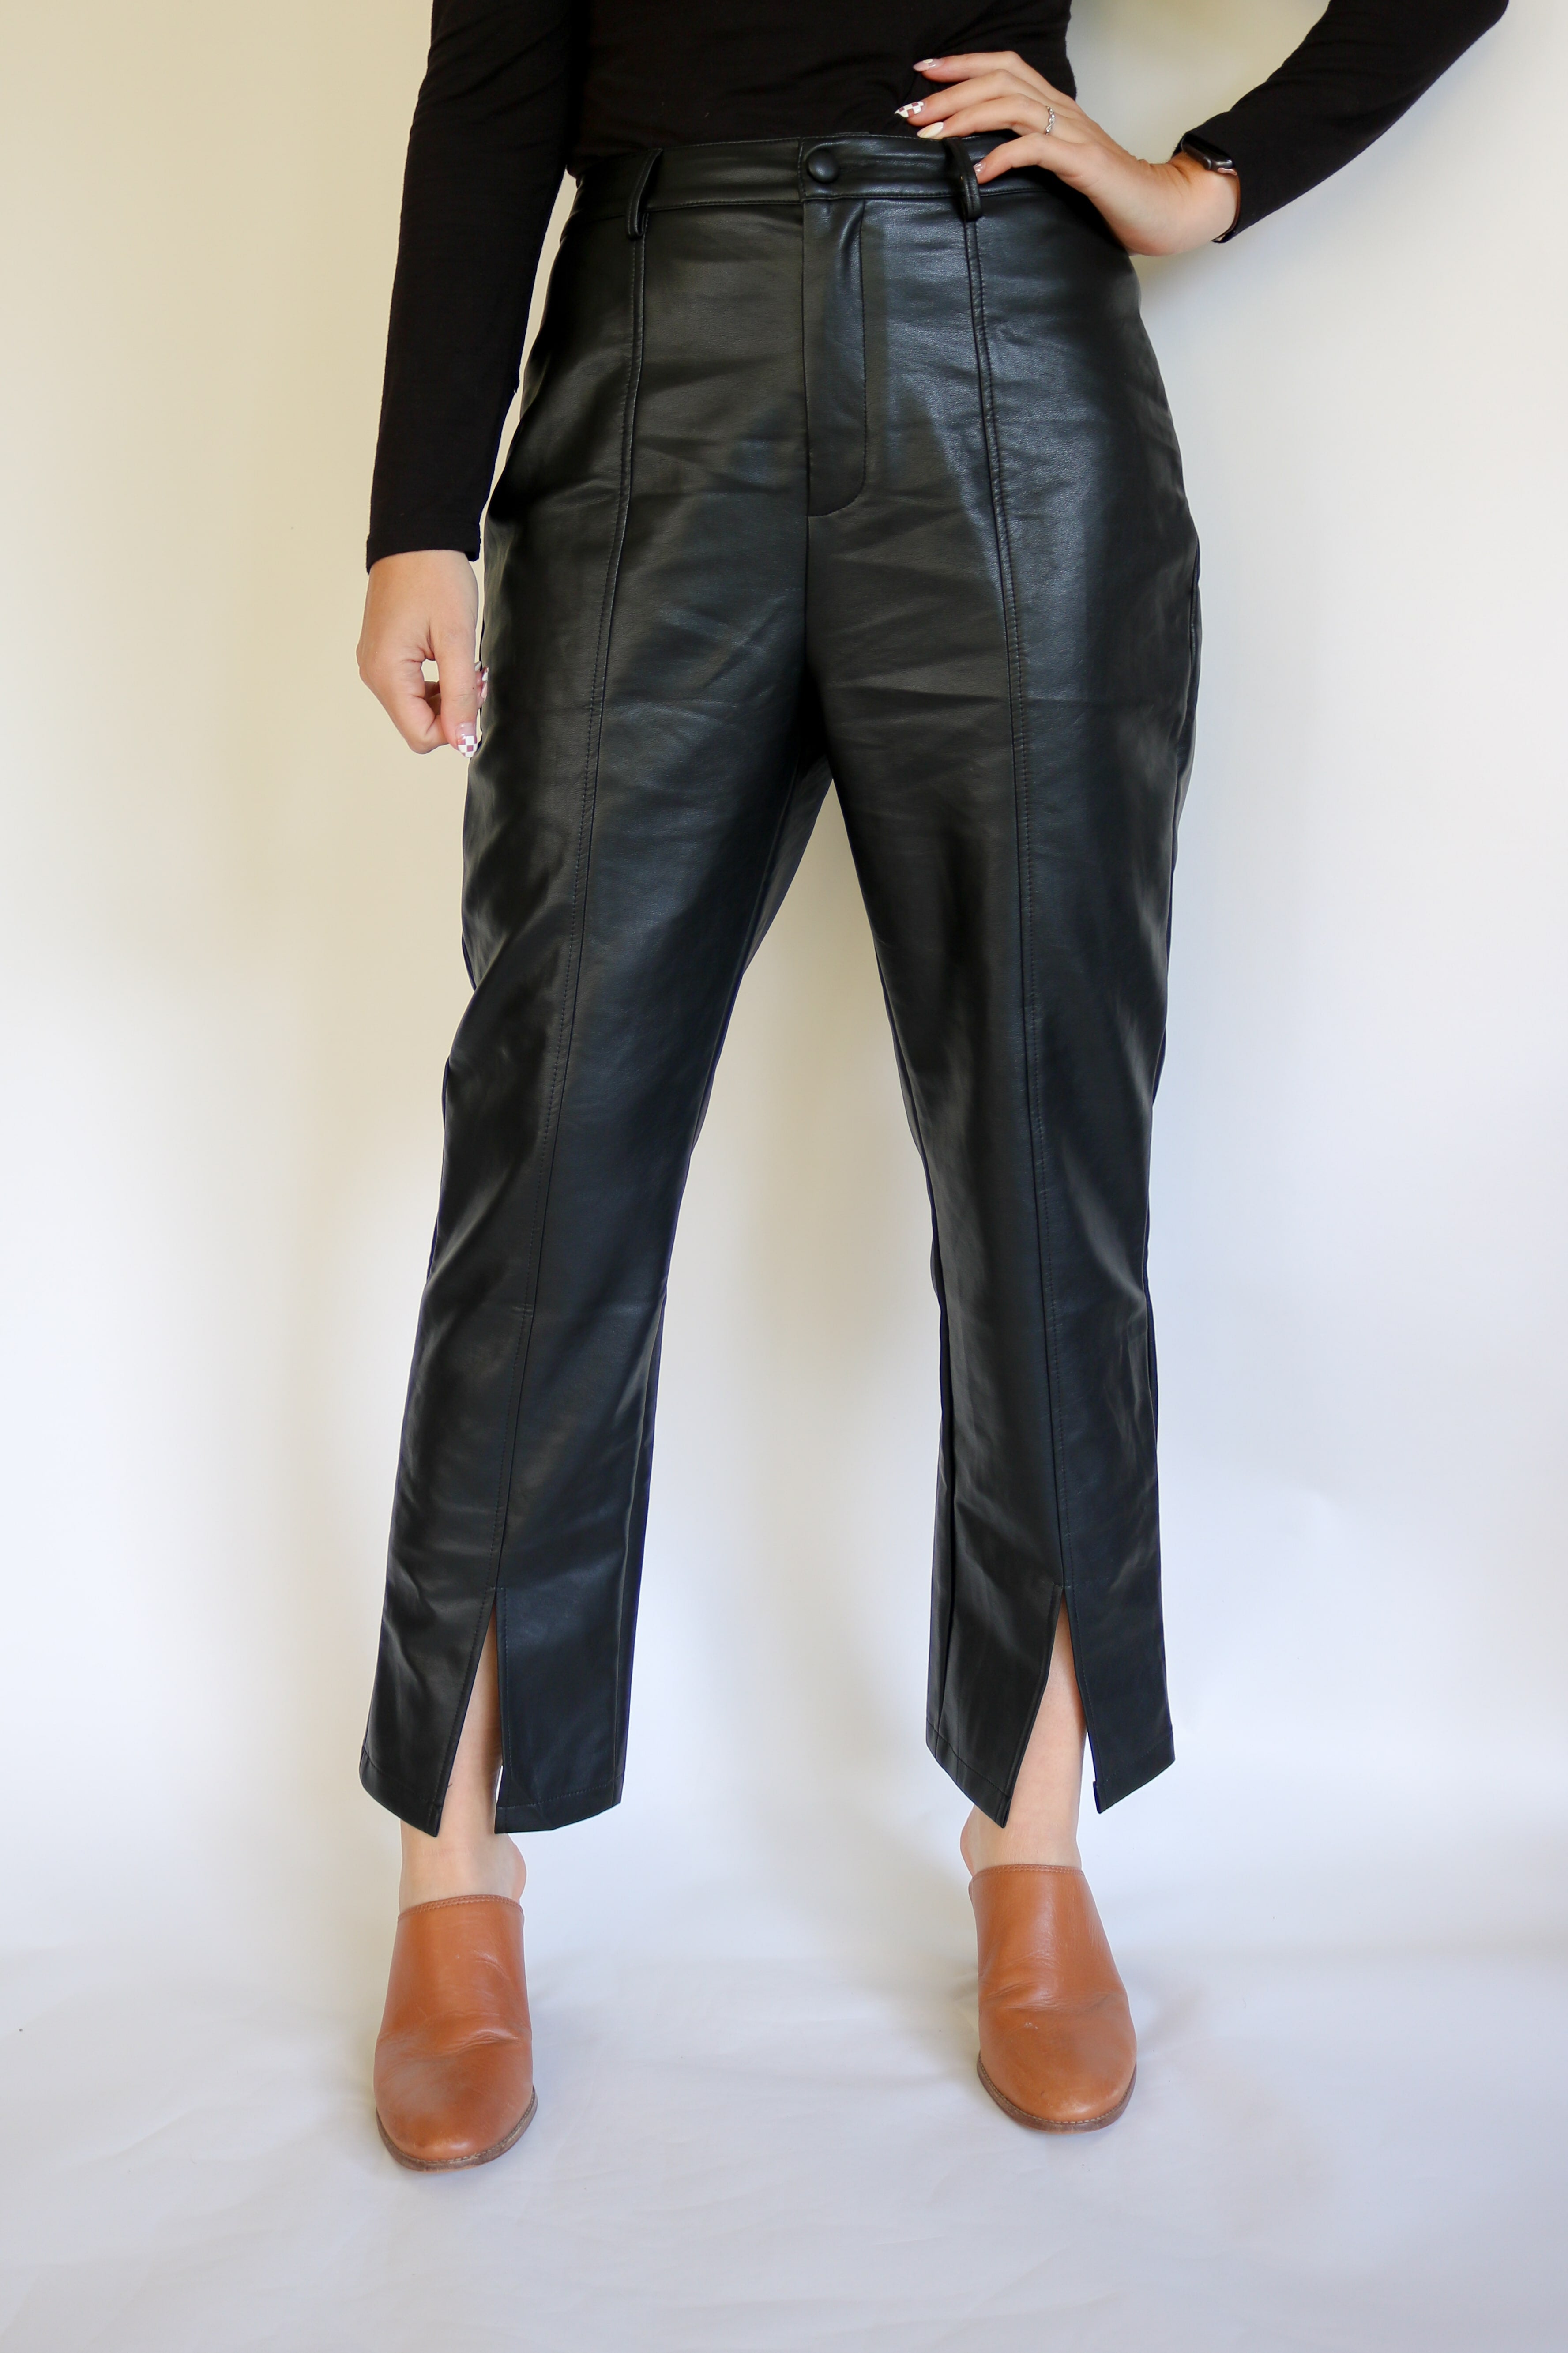 Black Leather Pants*